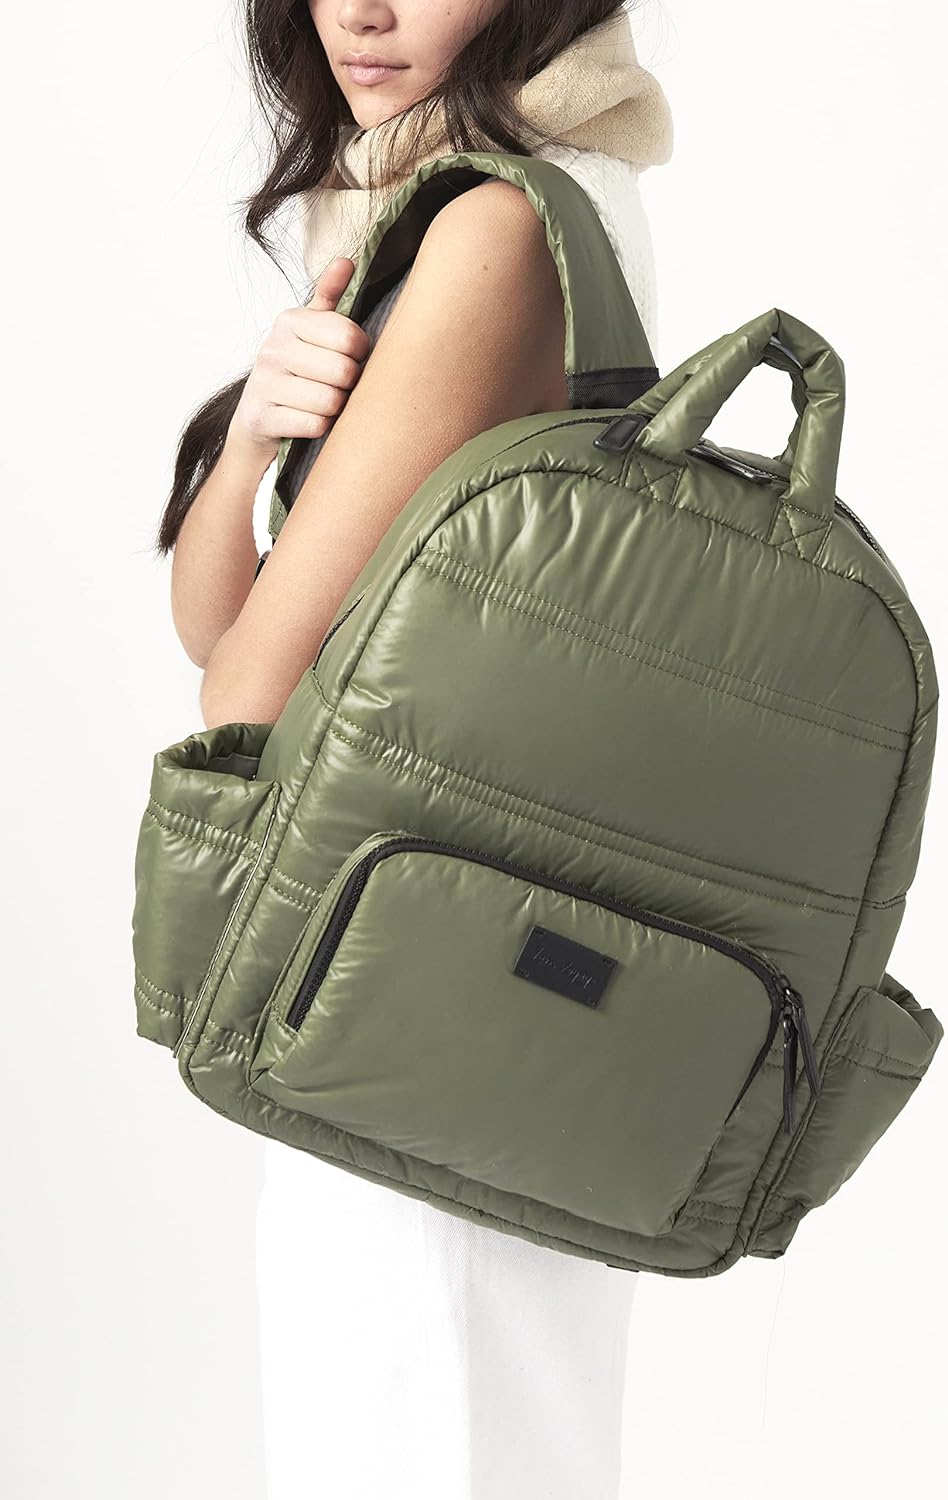 BK718 Backpack Diaper Bag - Green